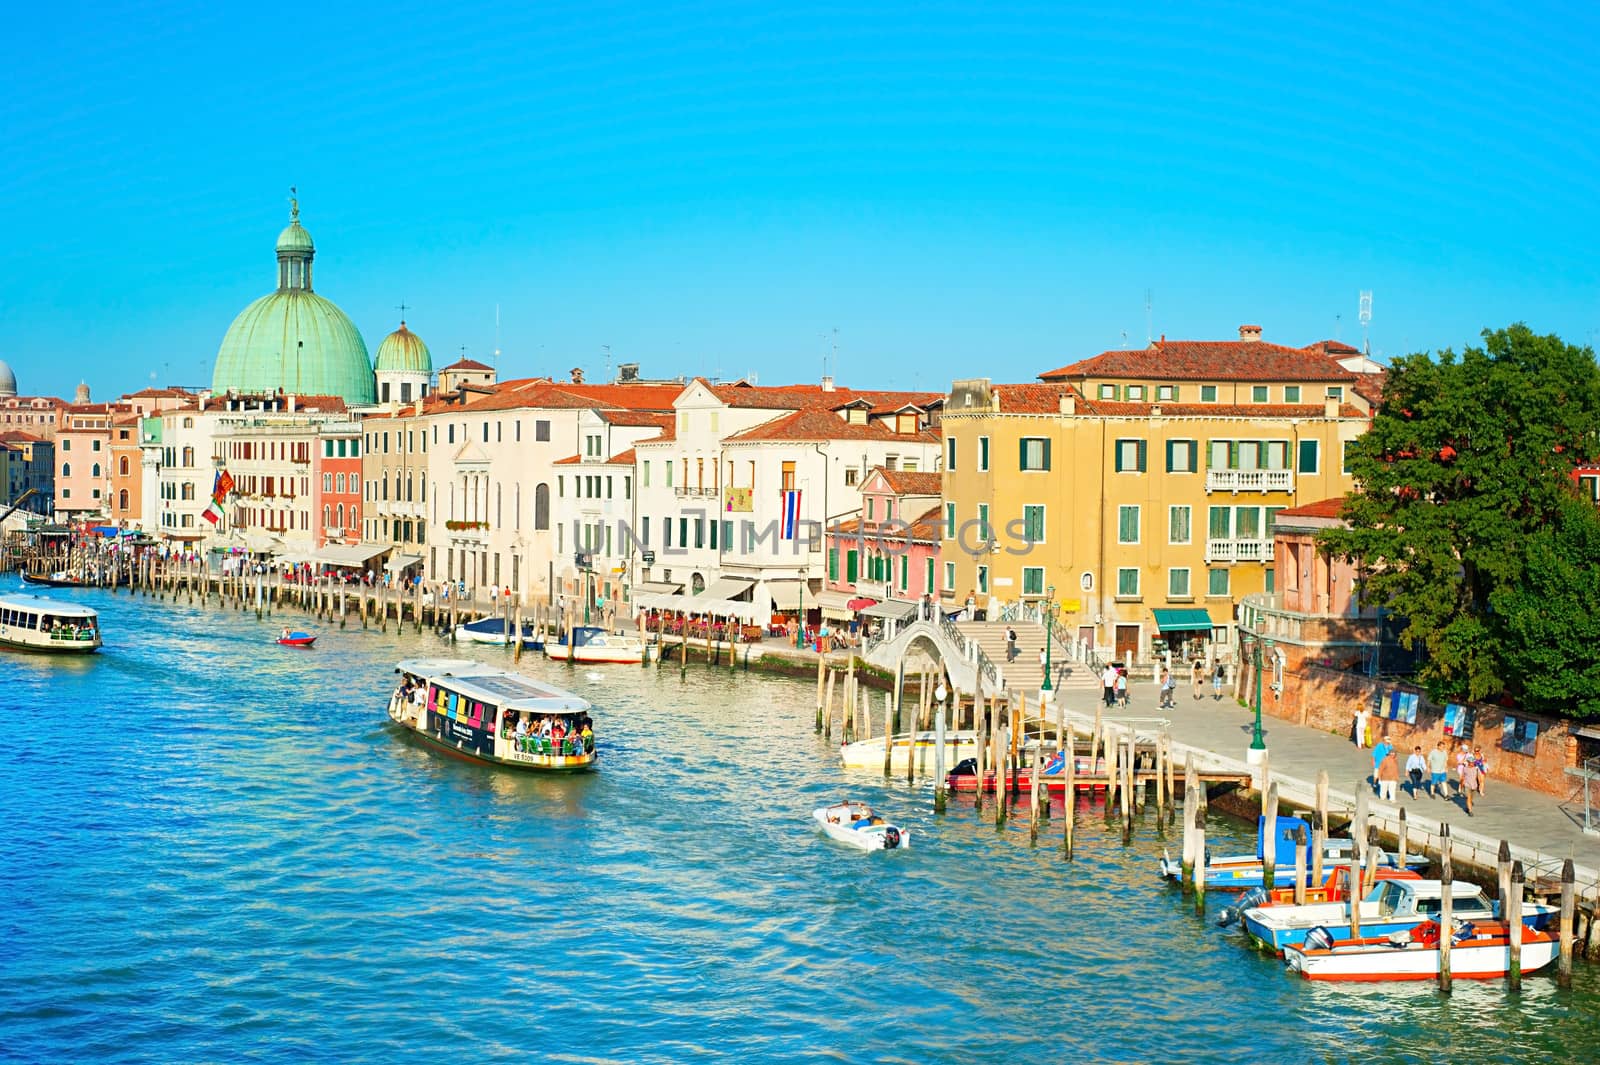 Venice scenics by joyfull